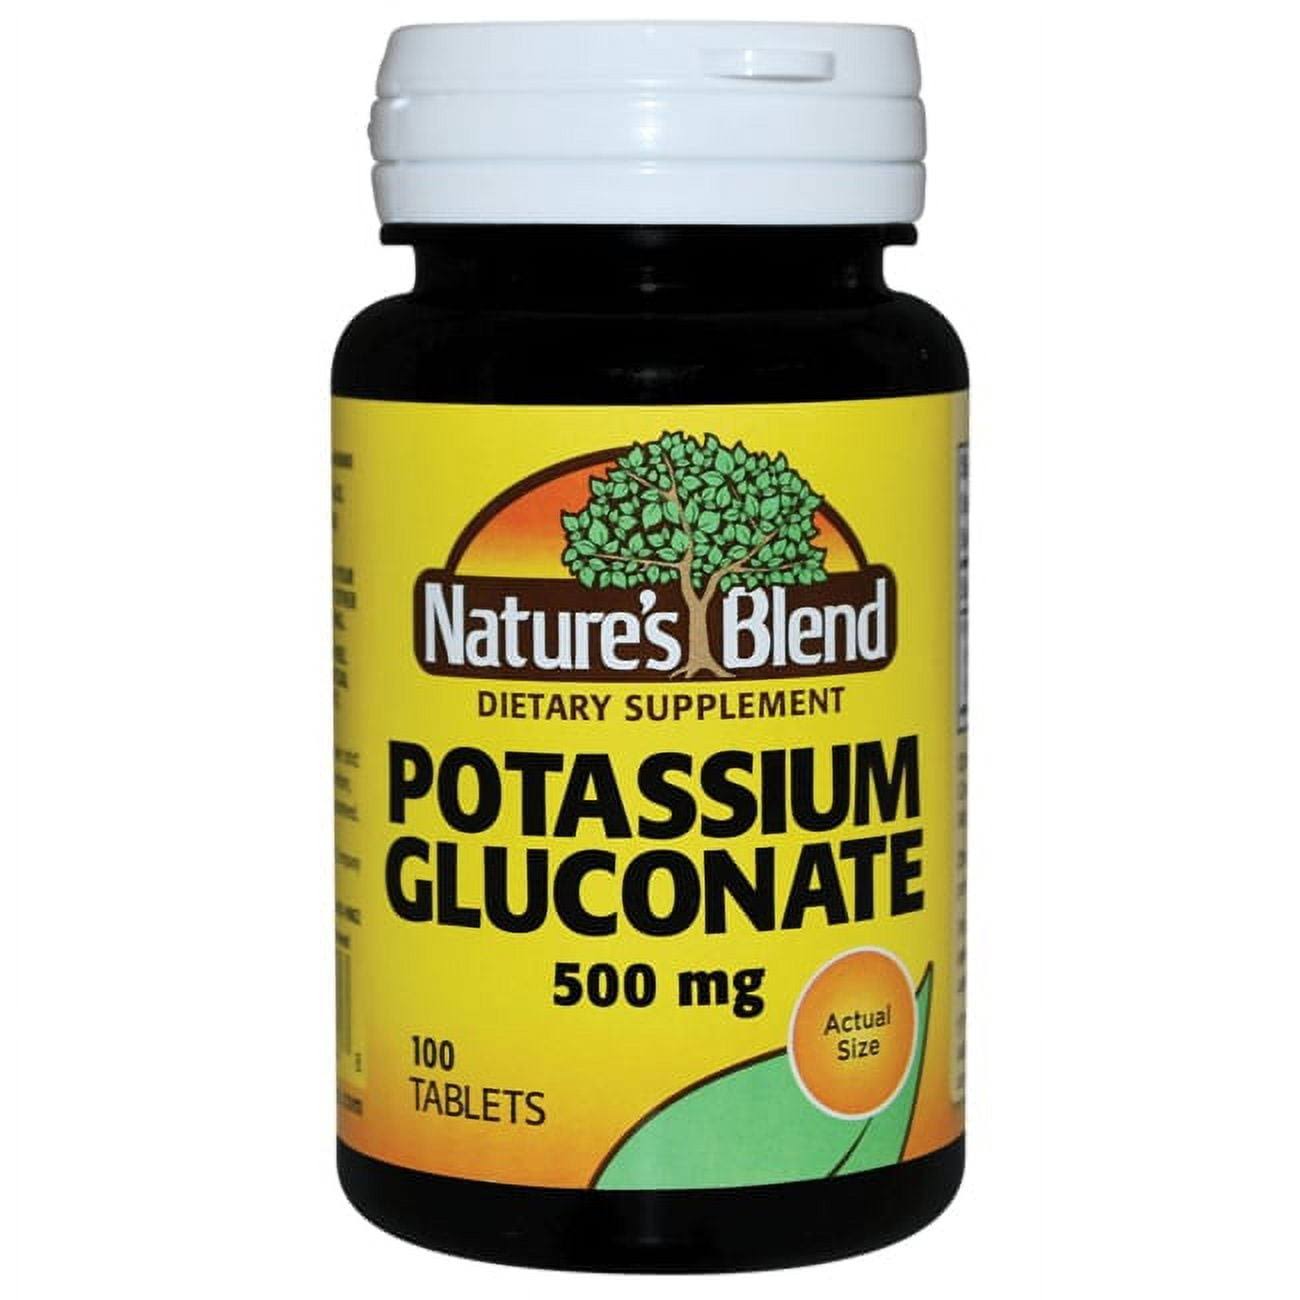 Nature's Blend Potassium Gluconate - 500mg, x100